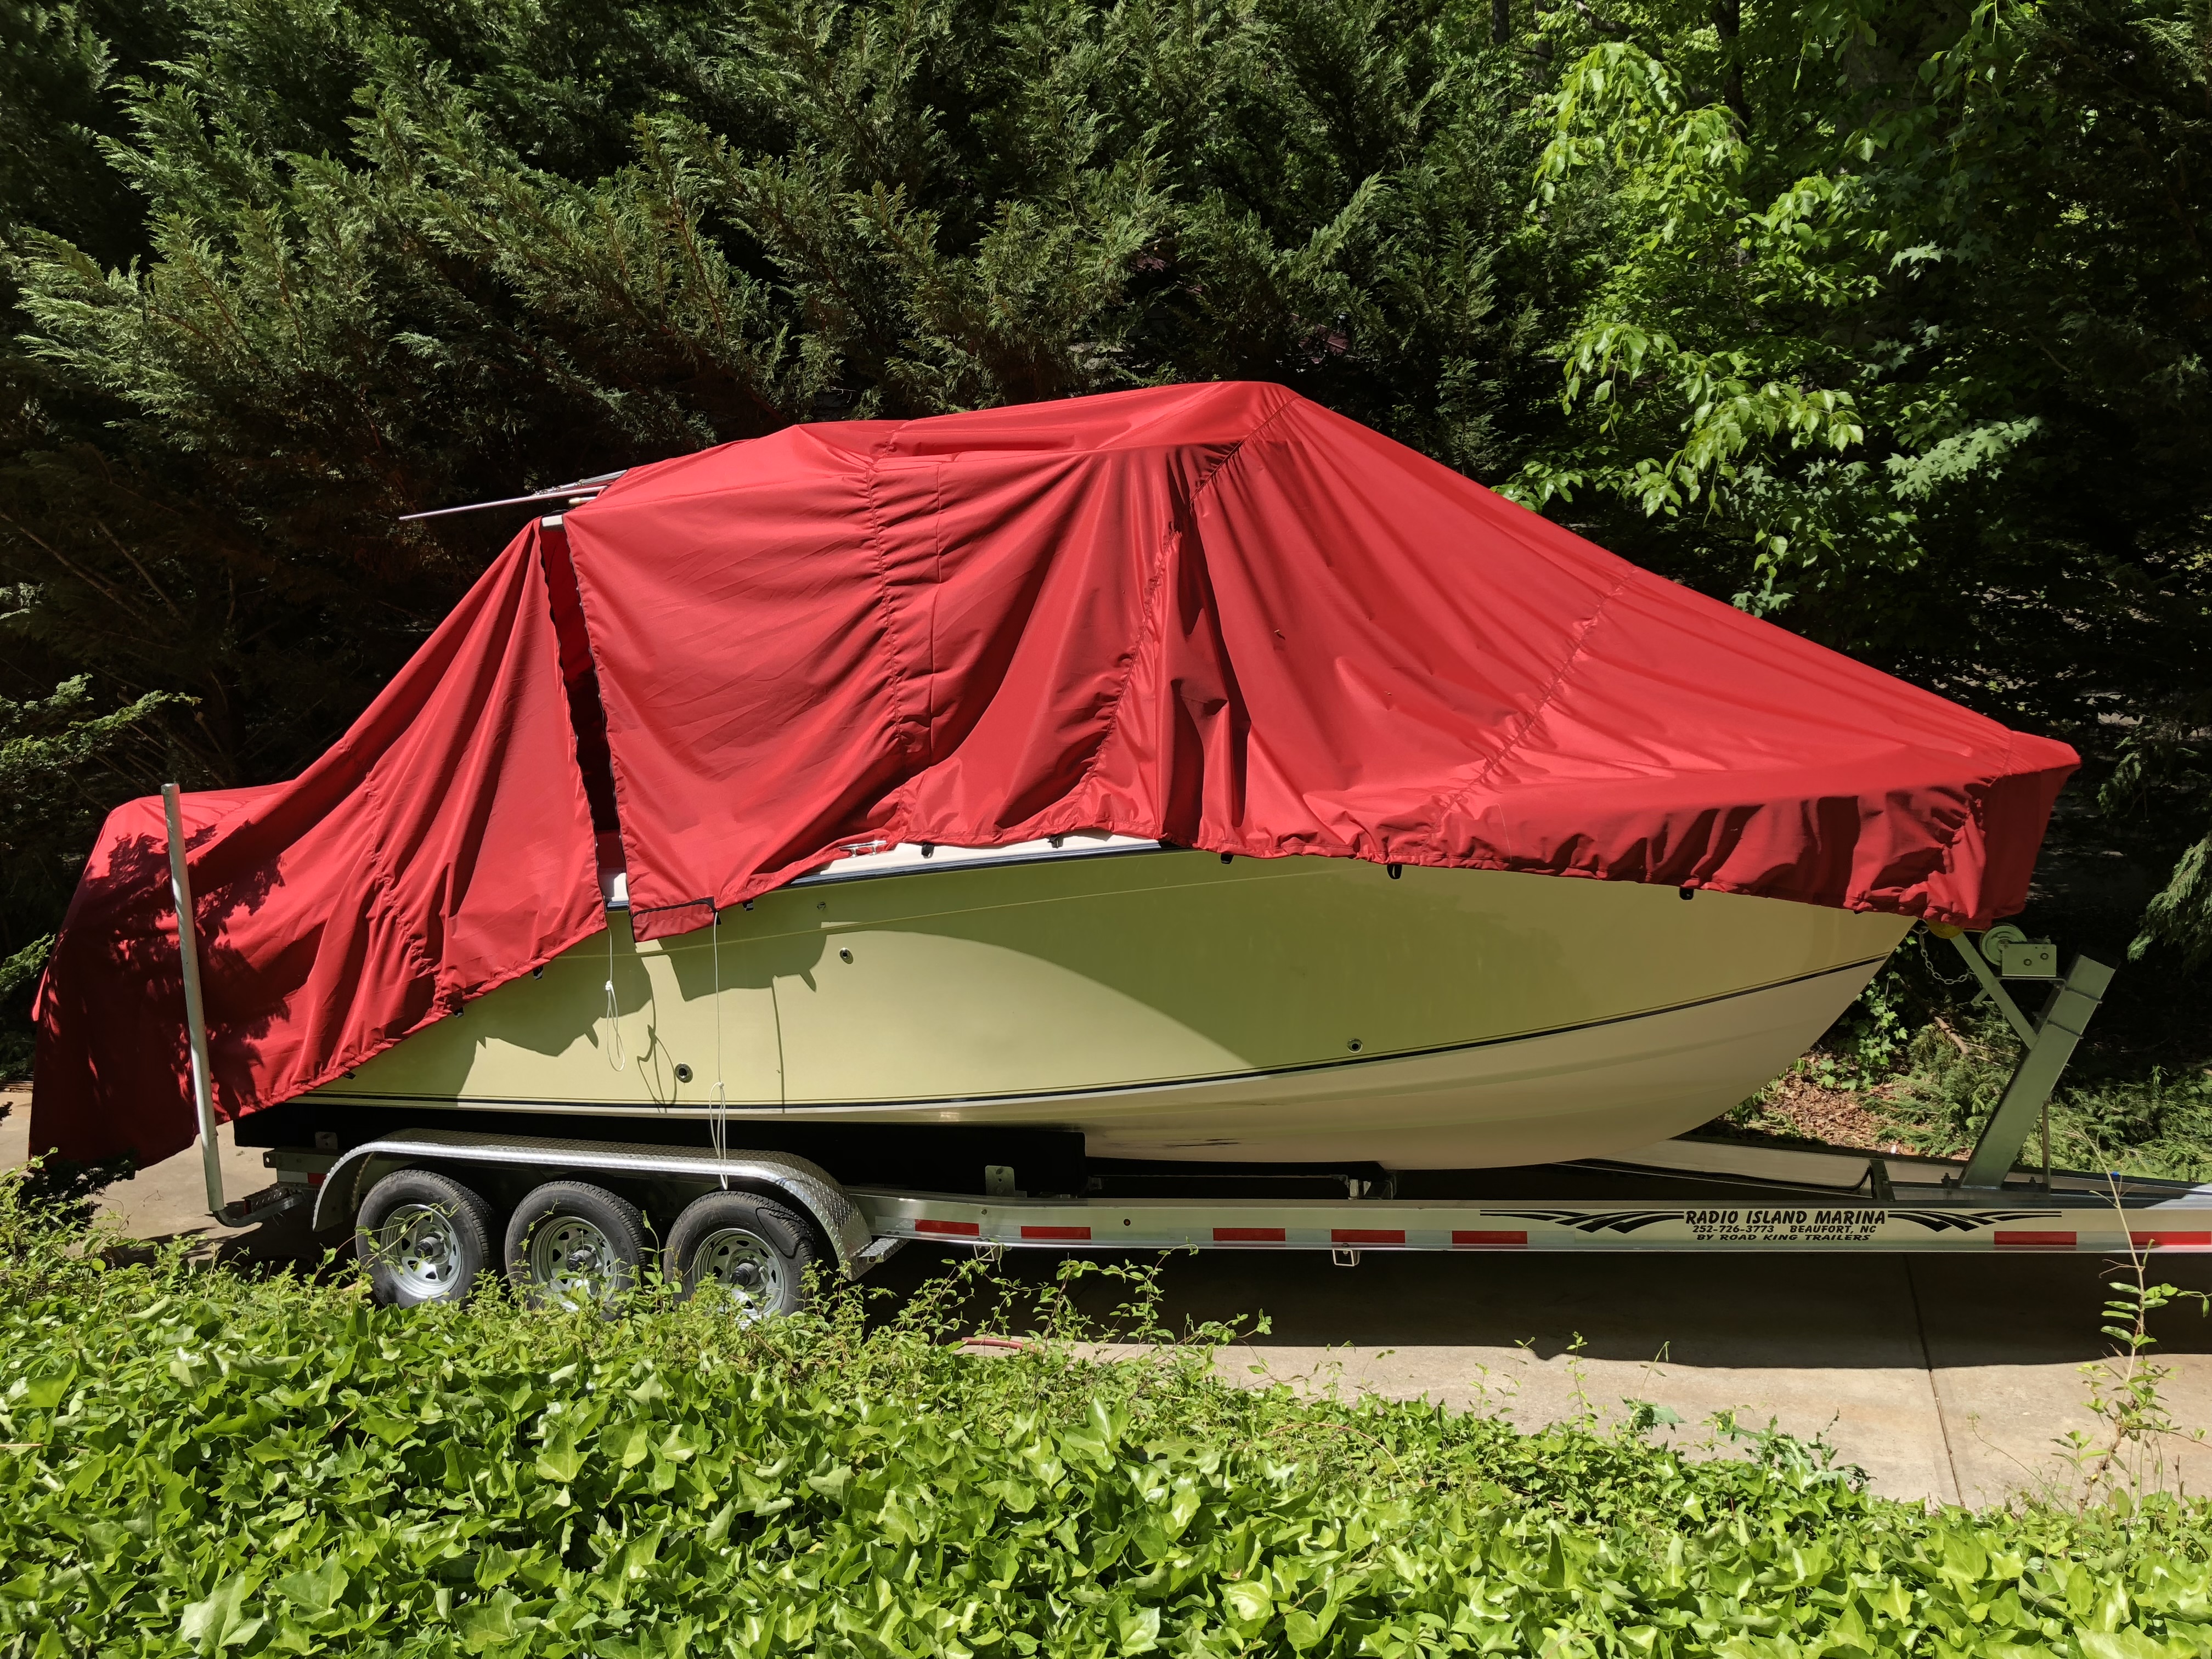 2007 Grady-White 283 Release Power boat for sale in Gainesville, GA - image 17 